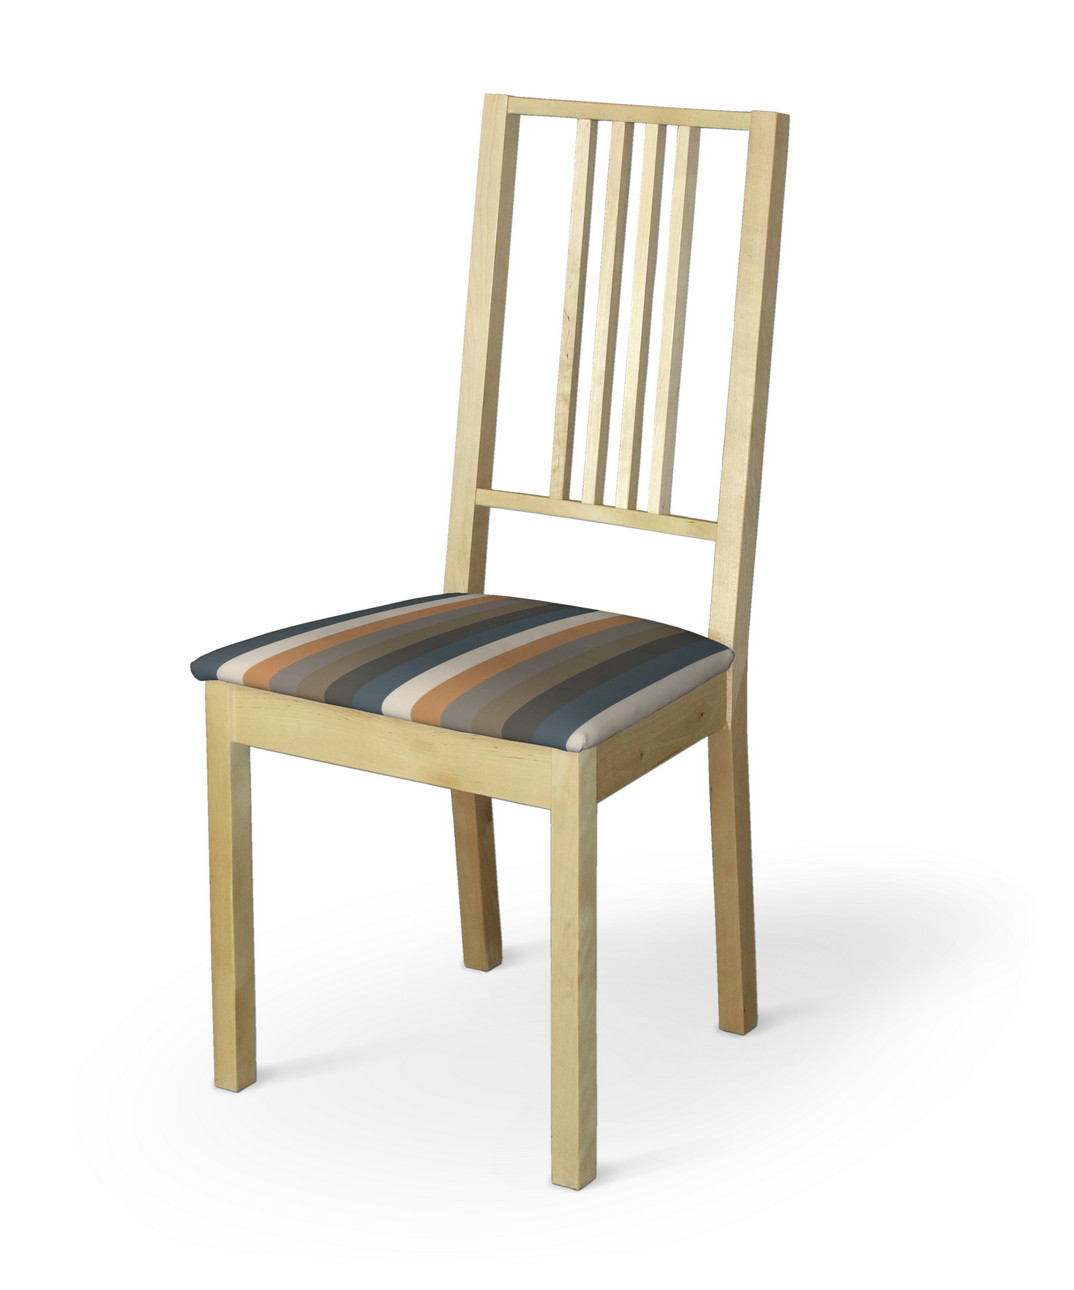 Dekoria Potah na sedák židle Börje, pruhy rezavá hnědá modrá, potah sedák židle Börje, Vintage 70's, 143-58